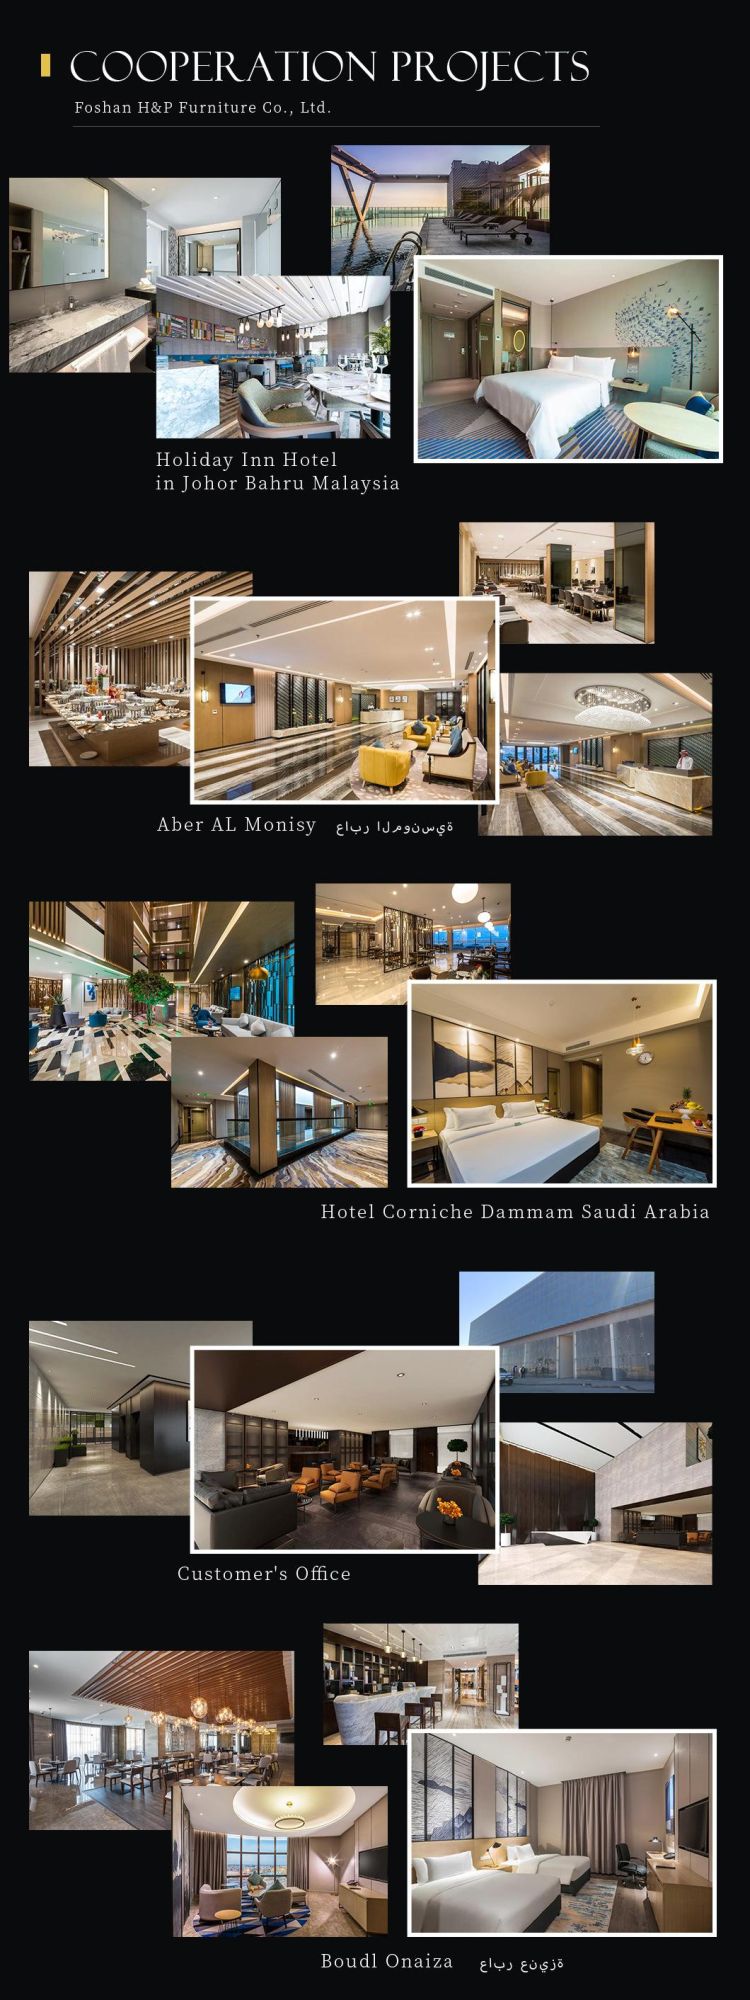 China 5 Star Hotel Manufacturer Wholesale Cheap Modern Luxury Hotel Divan Bedroom Furniture Set